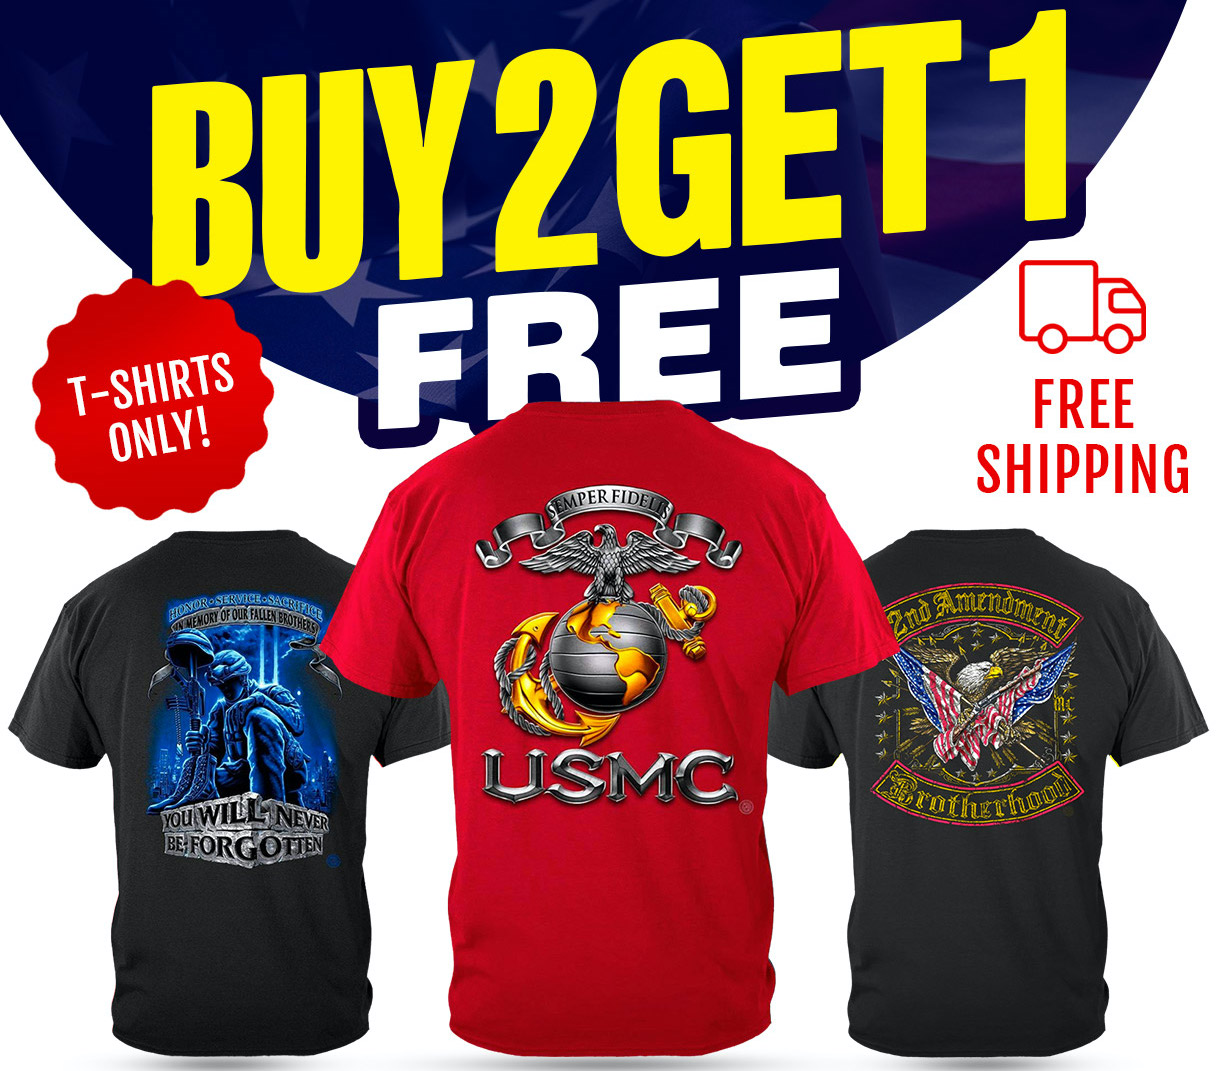 Shop Erazor Bits Offers a Buy 2 T-Shirts Get 1 Free Deal